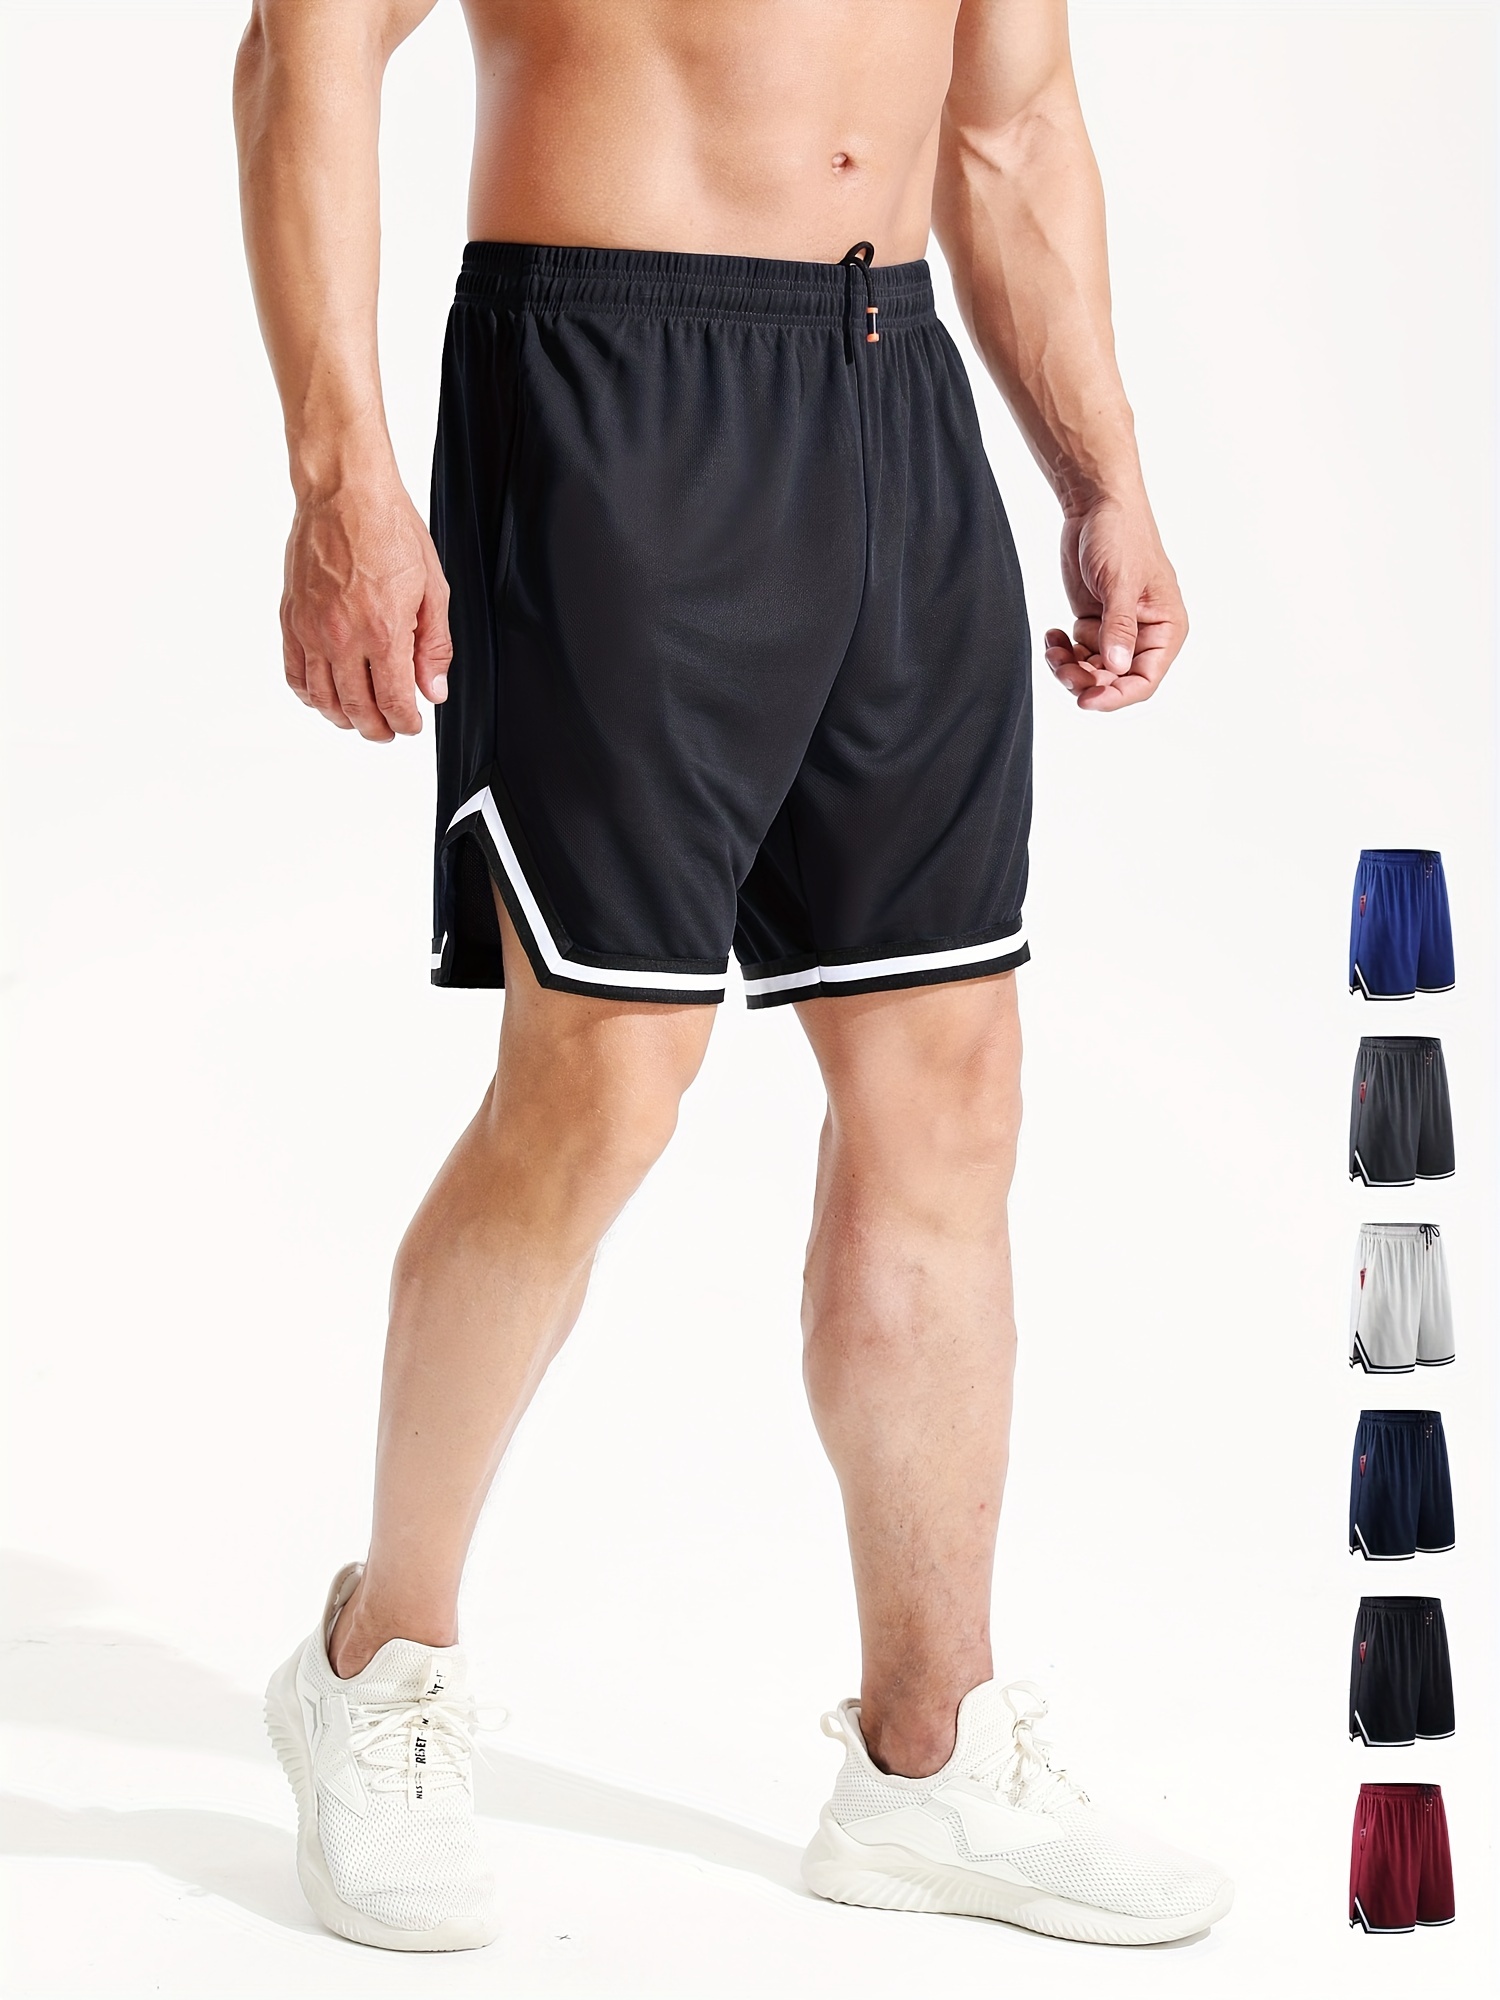 Pantalones cortos de verano para correr para hombre, Shorts deportivos para  gimnasio, tenis, baloncesto, fútbol, Maratón